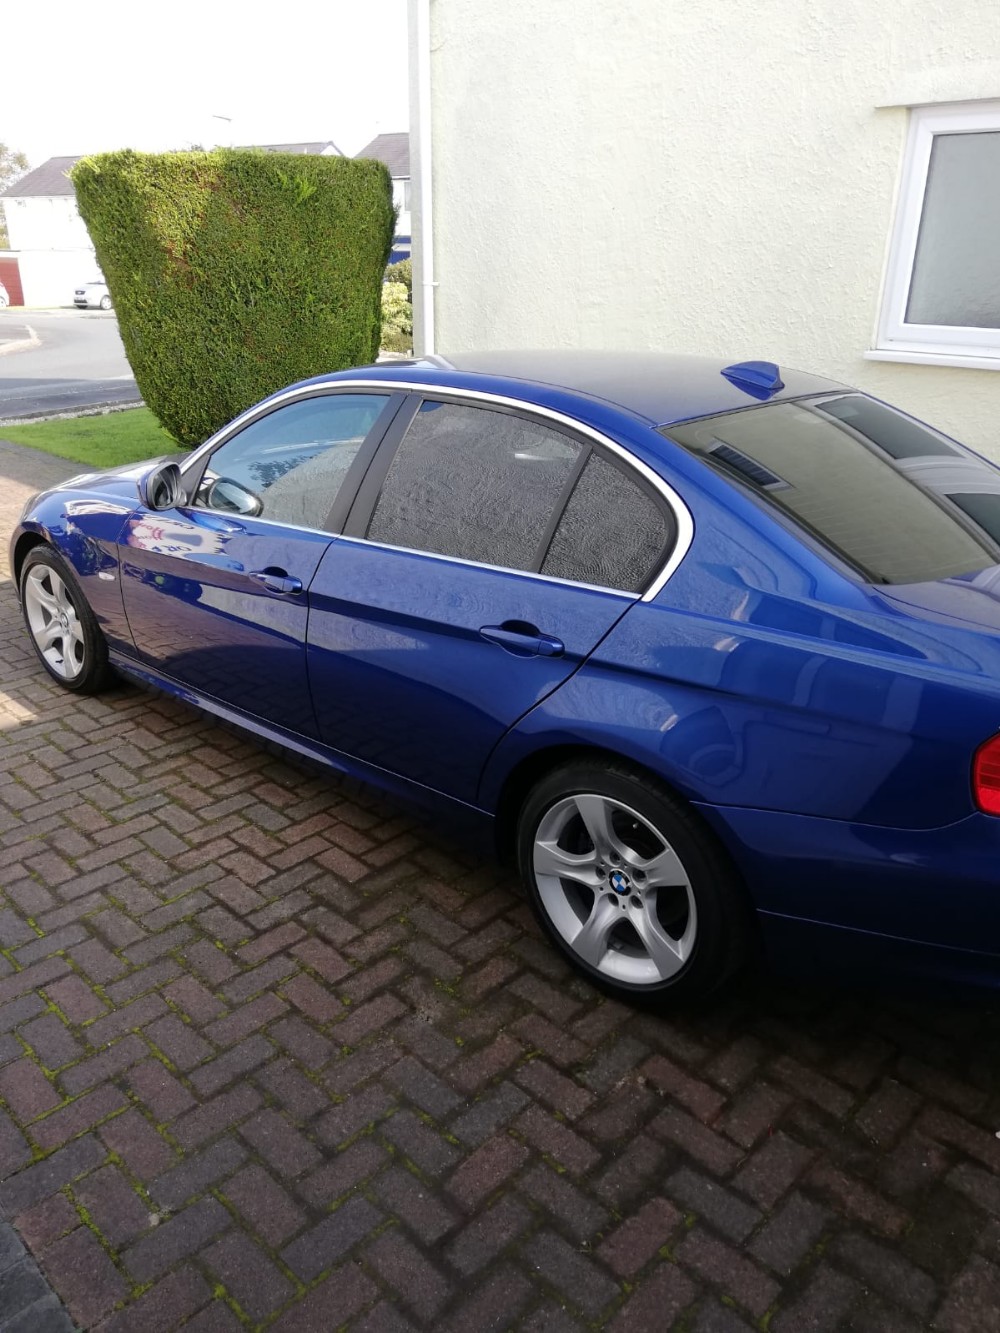 BMW 320 SALOON, Blue, Registration Number CX61 XEJ, Nov 2011 registered, untaxed, MOT to 11 - Image 14 of 15